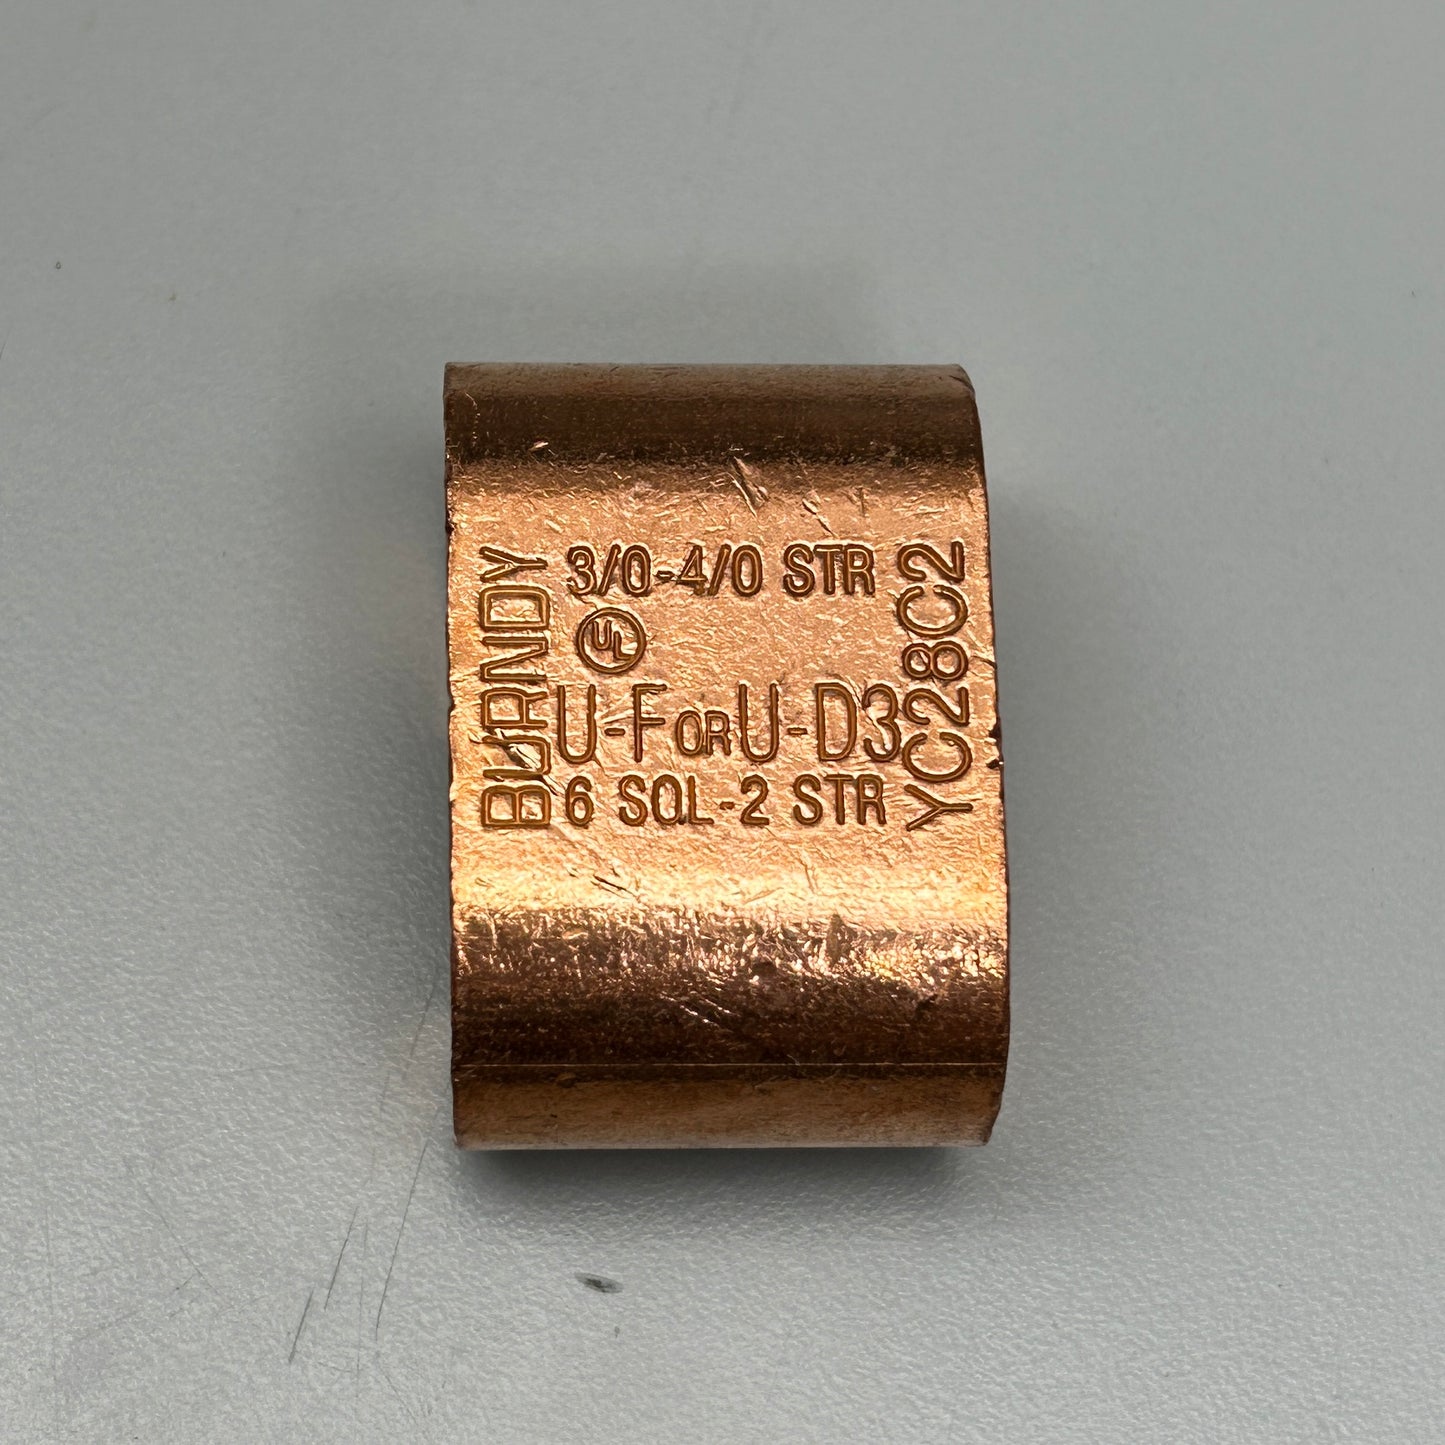 BURNDY 5-PACK Copper Tap Connectors YC28C2 (New)